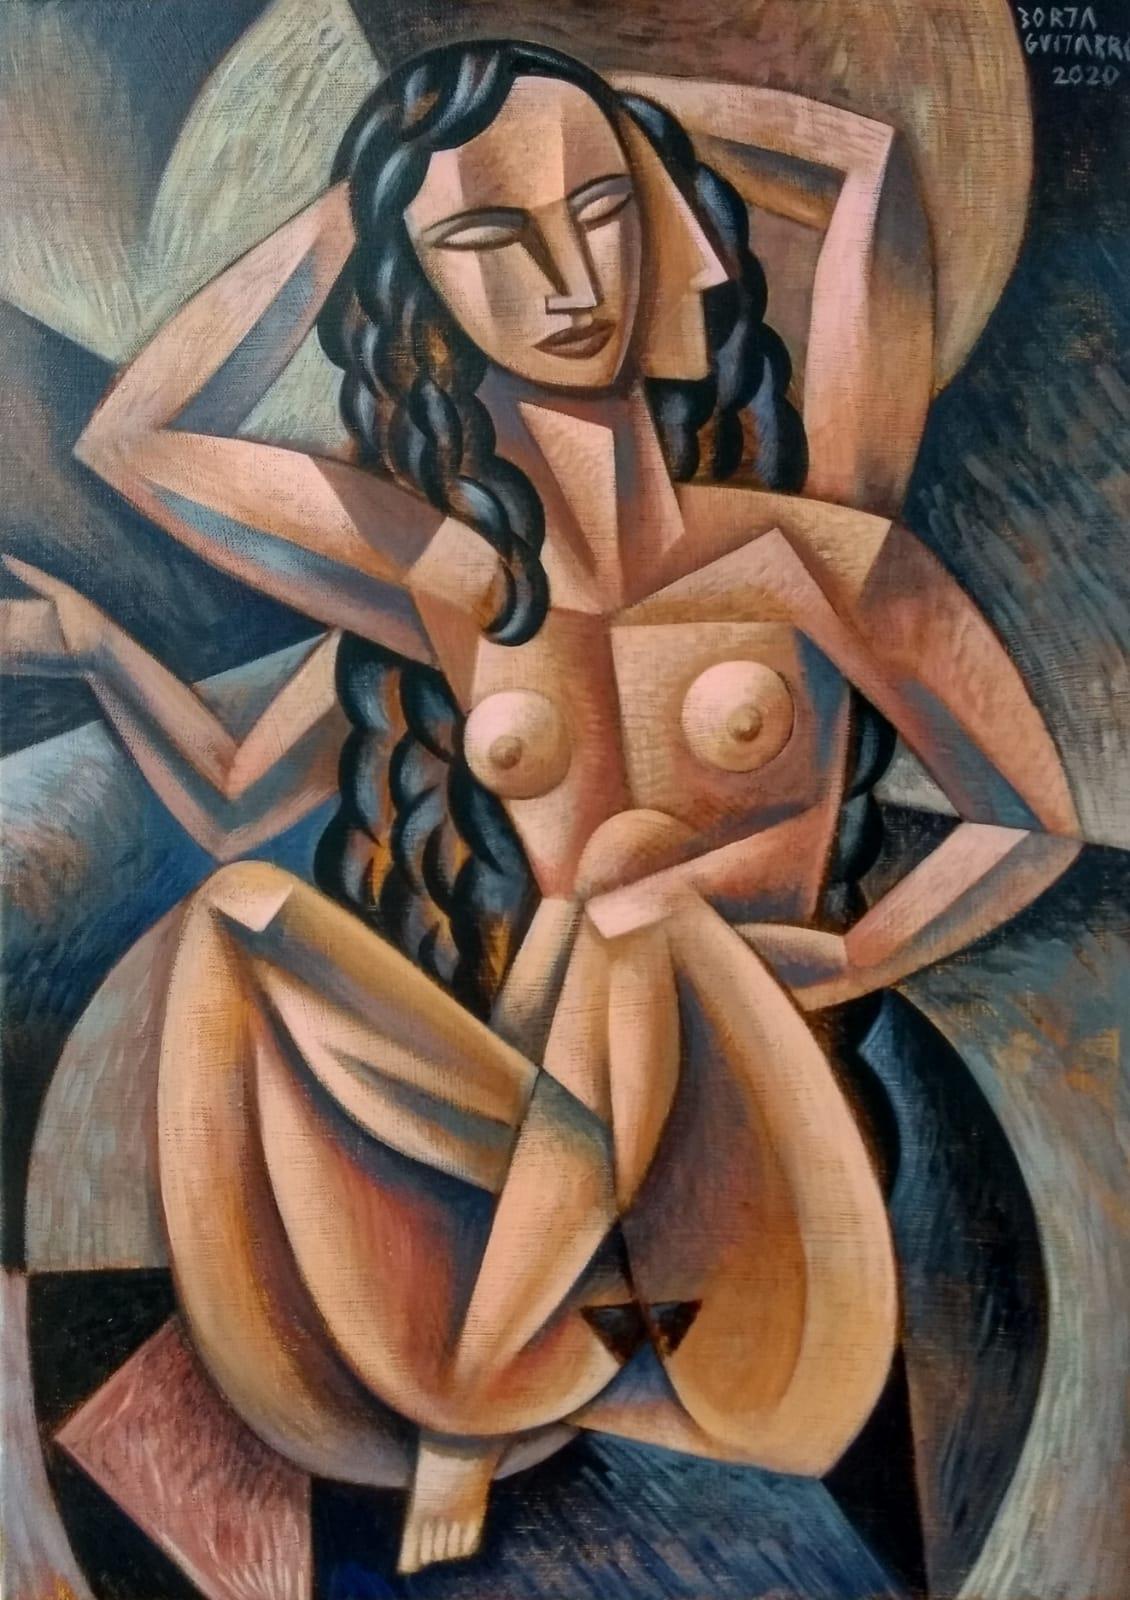 Borja Guijarro Nude Painting - Nude - original naked female figure modern study abstract cubism form painting